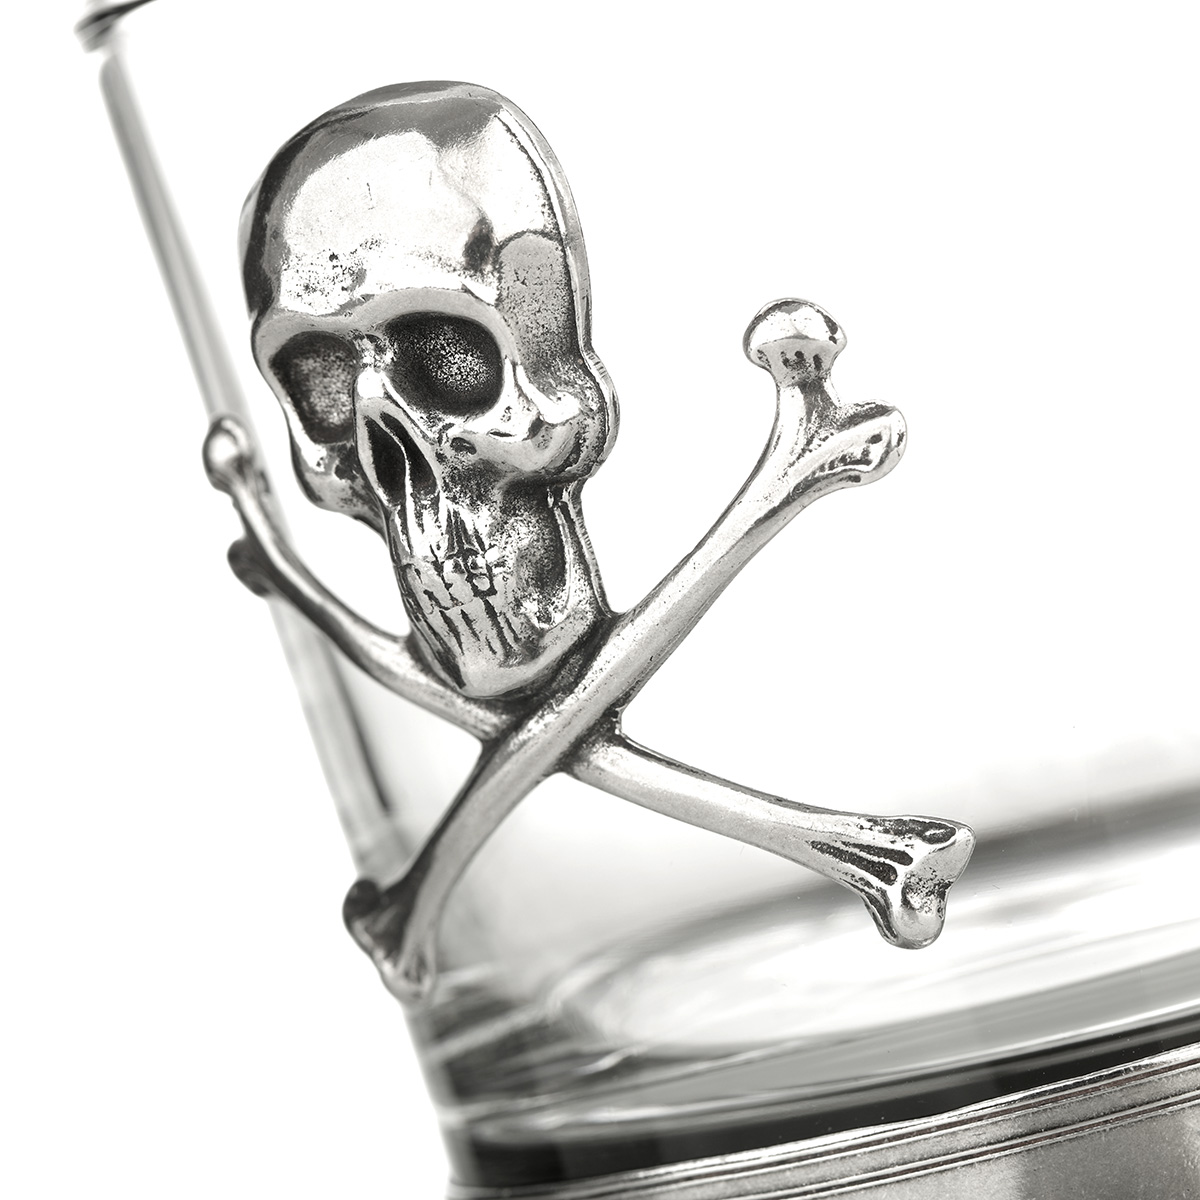 Skull & Crossbones Tumbler - Handgefertigtes Whisky Glas mit Totenkopf aus Zinn